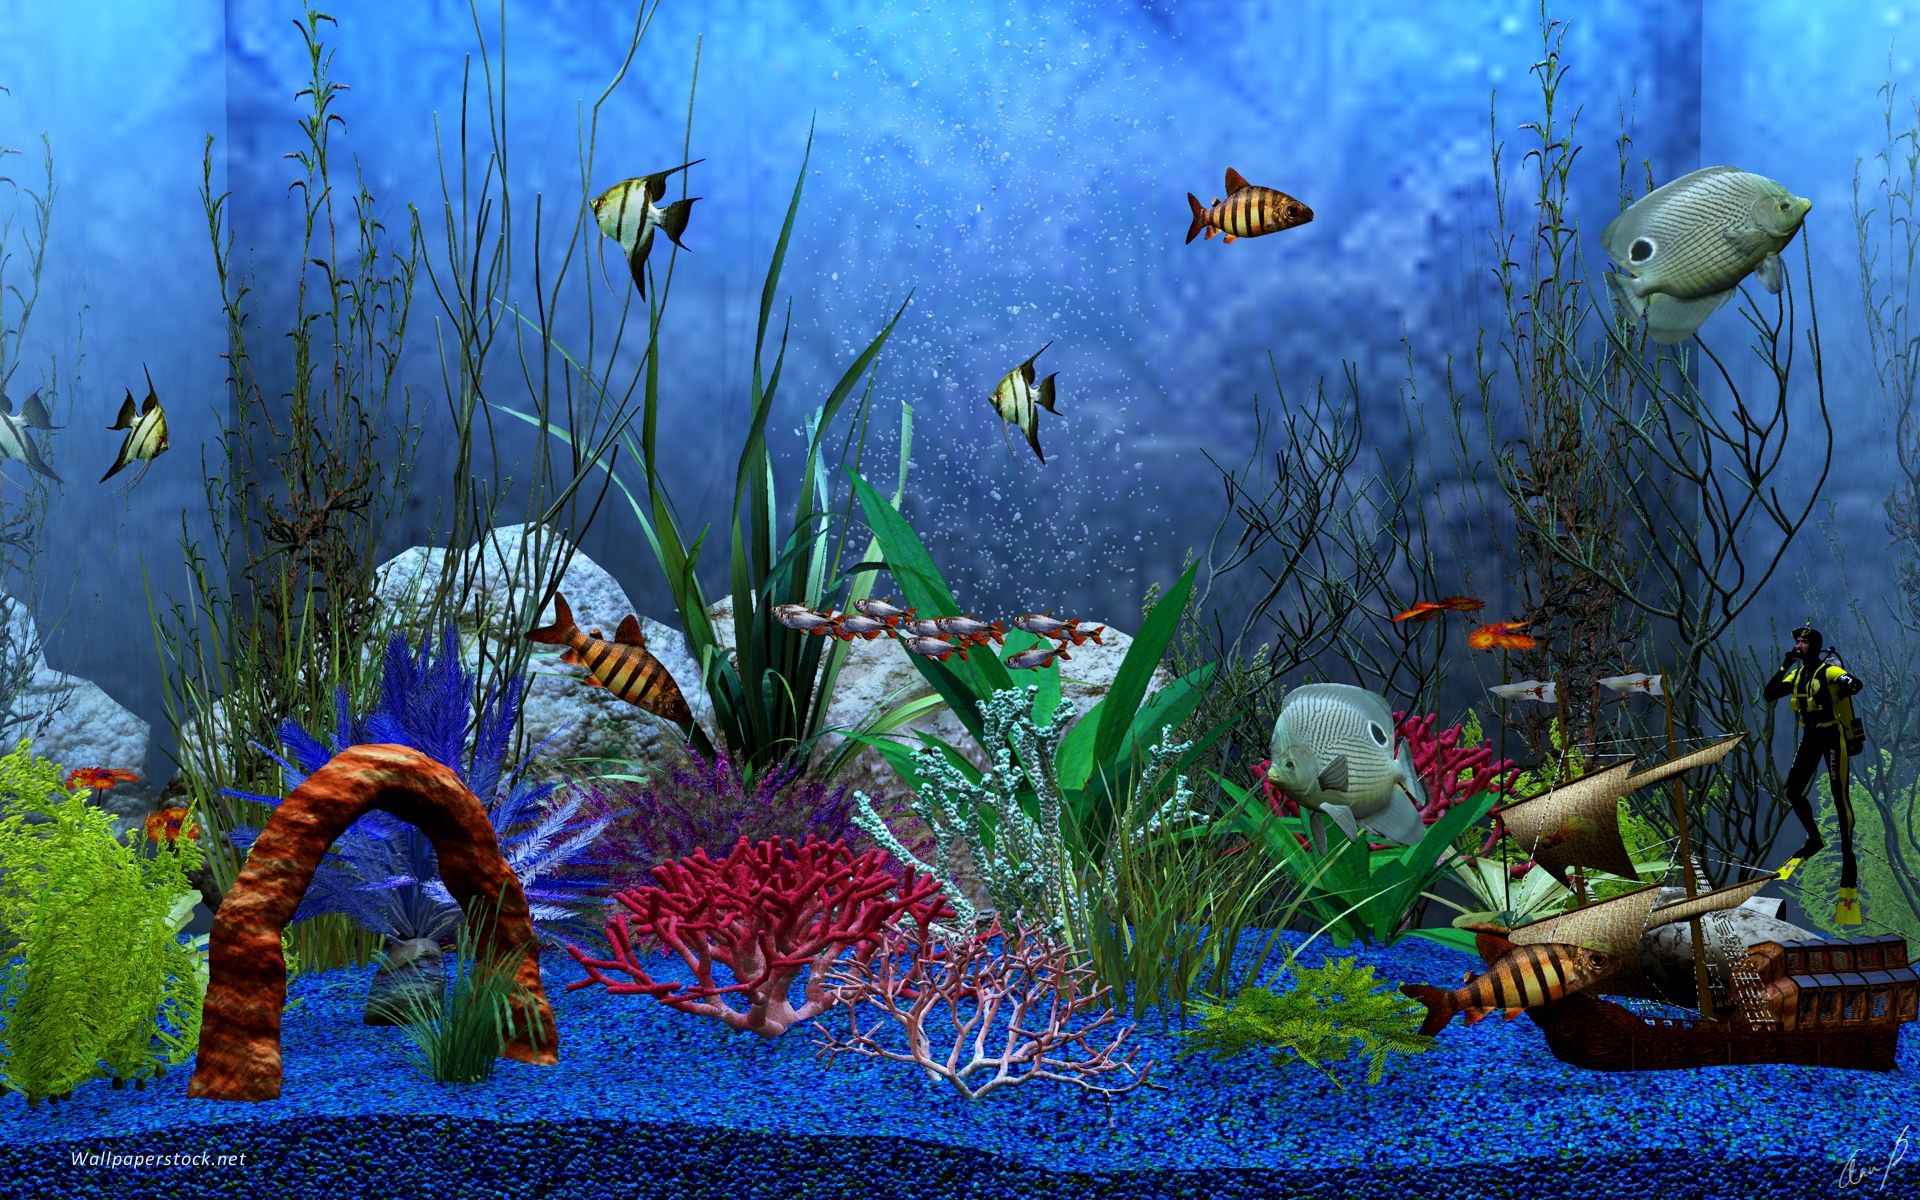  Aquarien Hintergrundbild 1920x1200. Aquarium anzeigen Hintergrundbilder. Aquarium anzeigen frei fotos